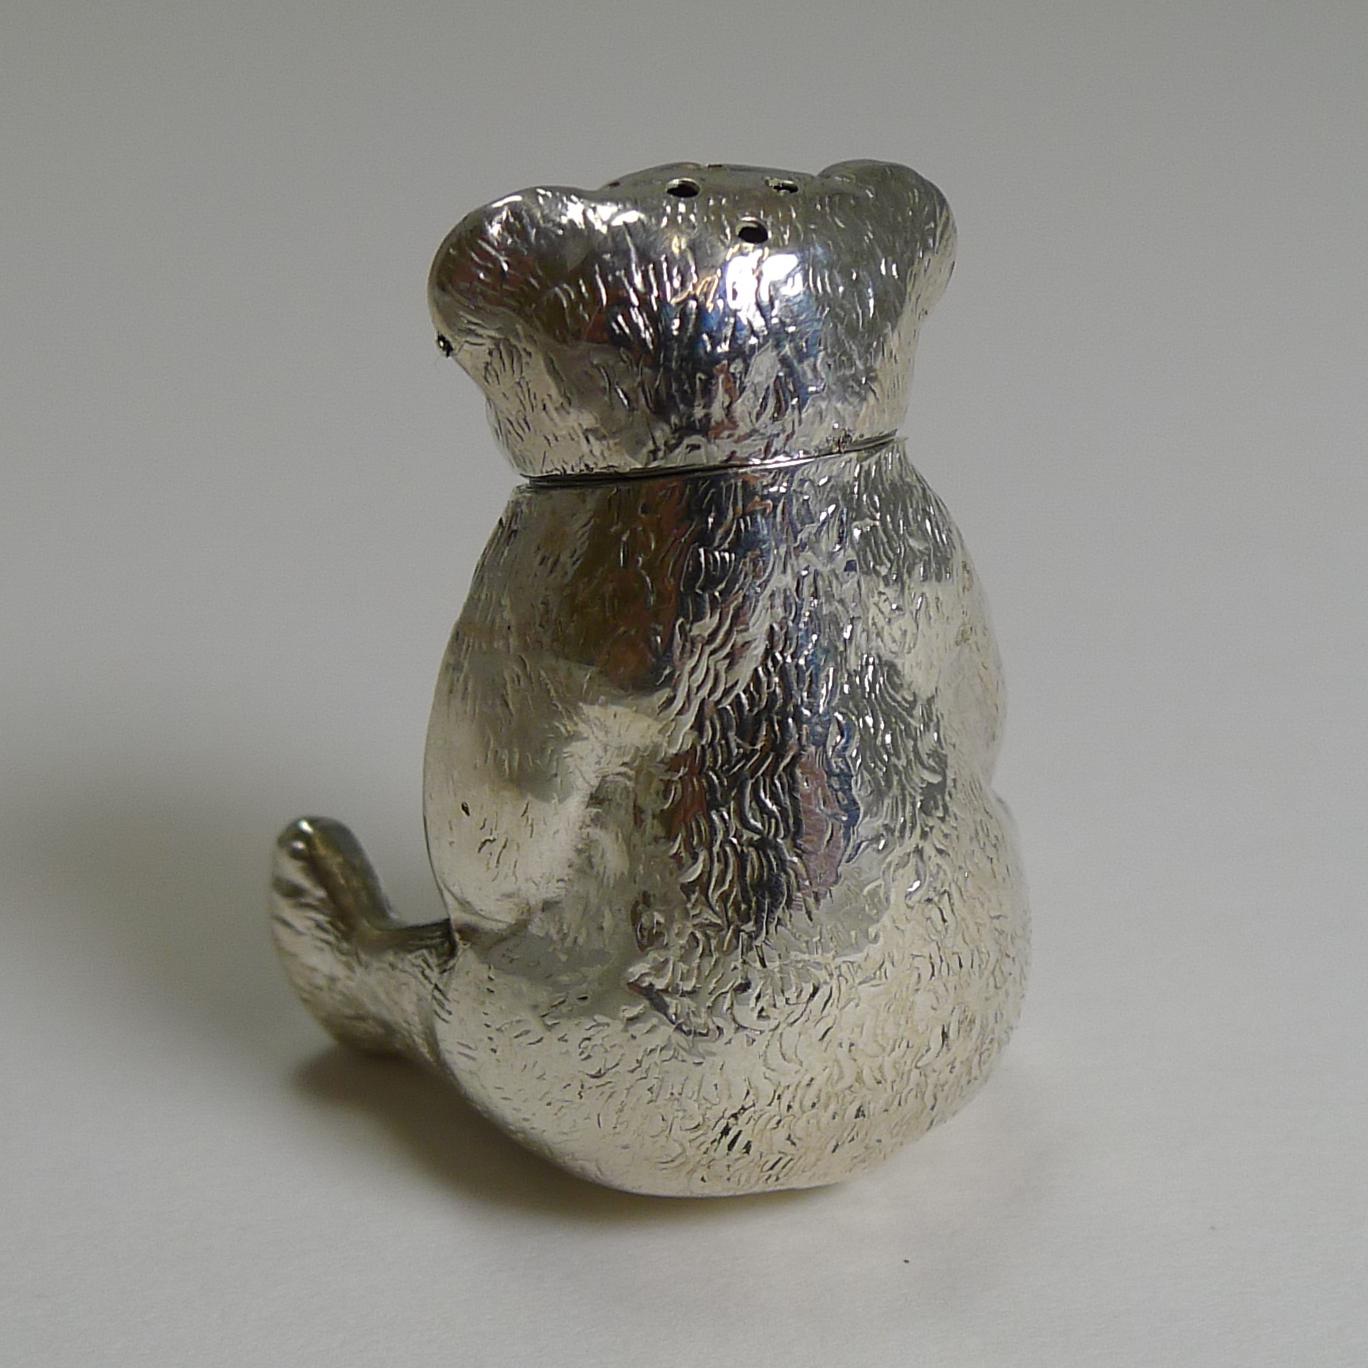 Small English Edwardian Sterling Silver Teddy Bear Pepperette / Pepper Pot 1